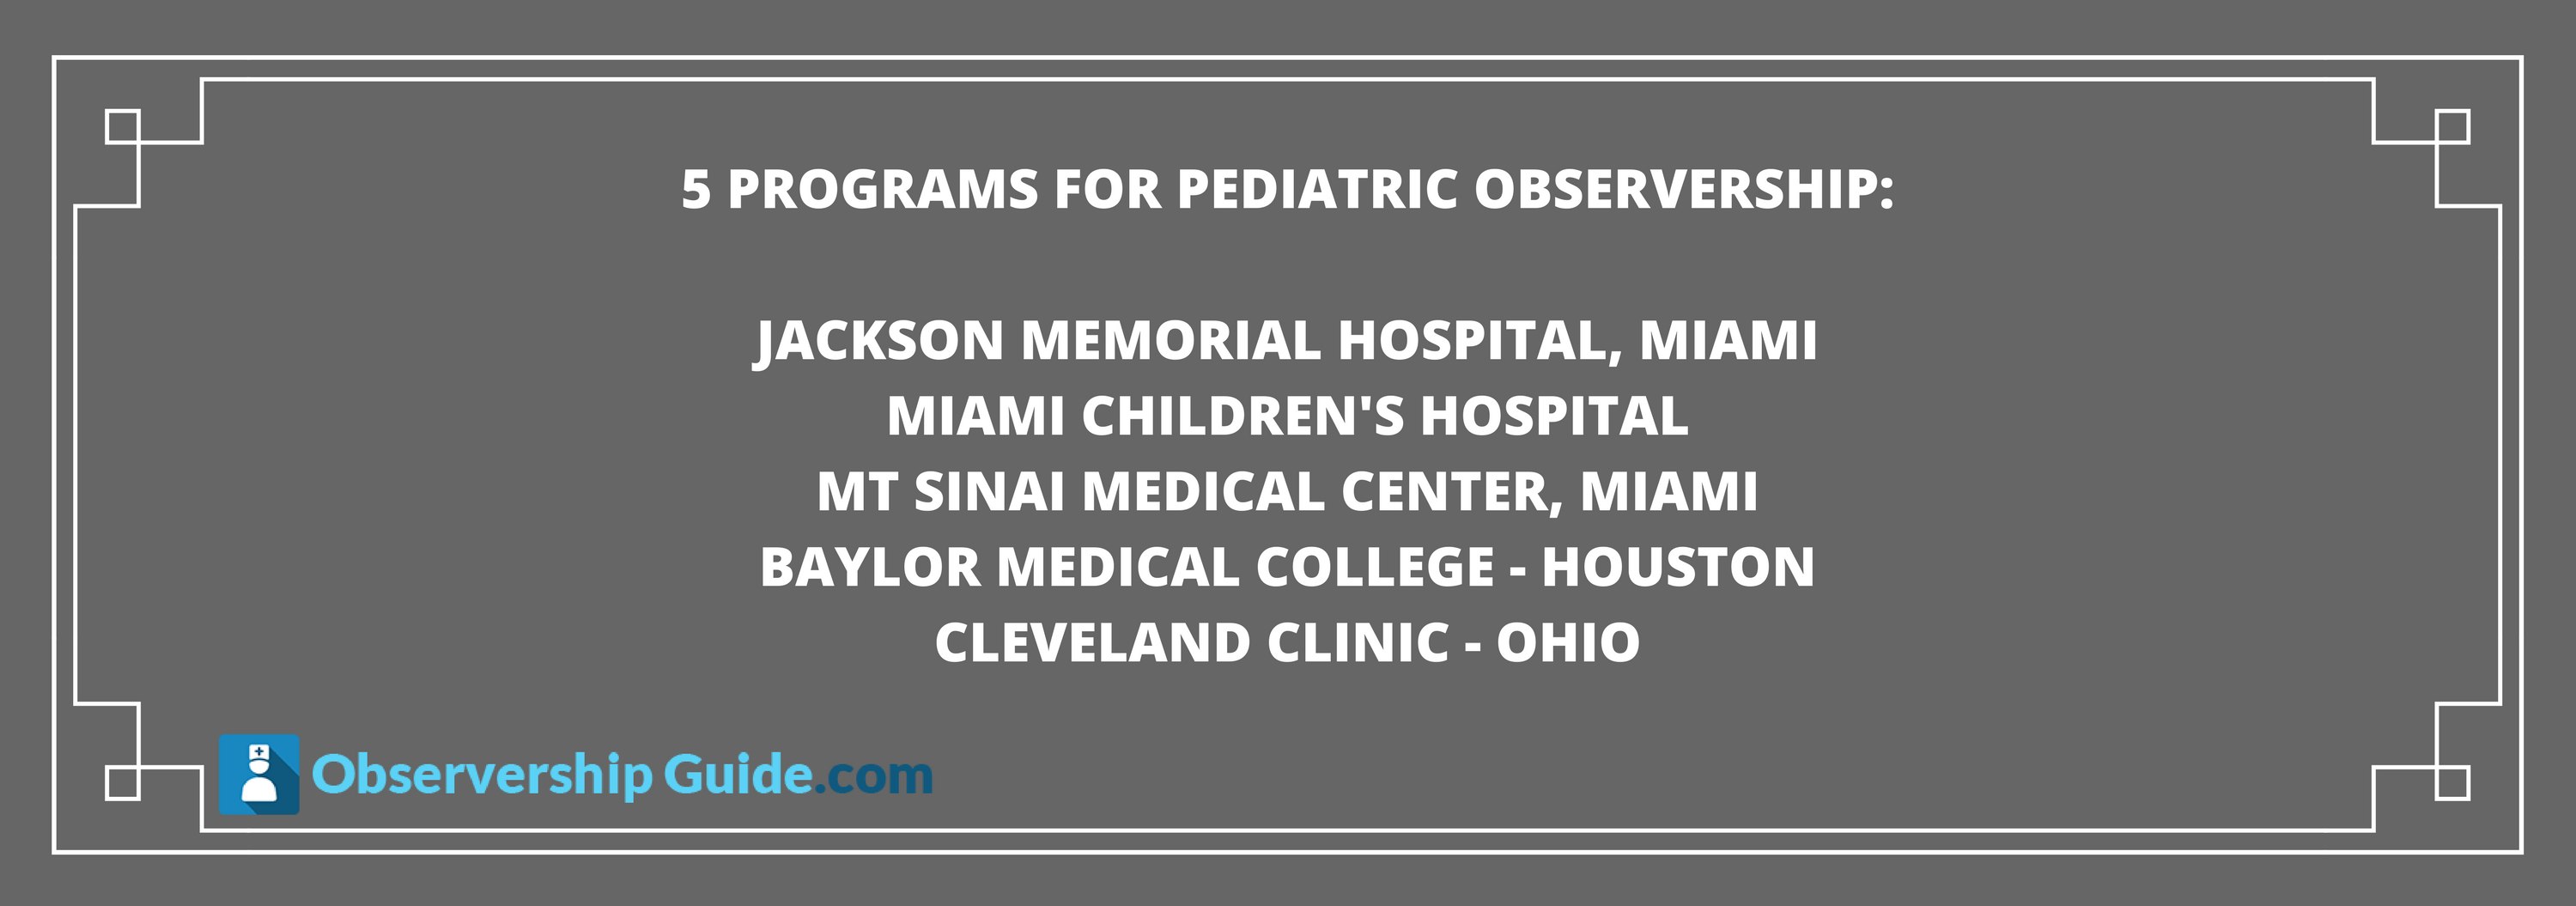 pediatric observership programs